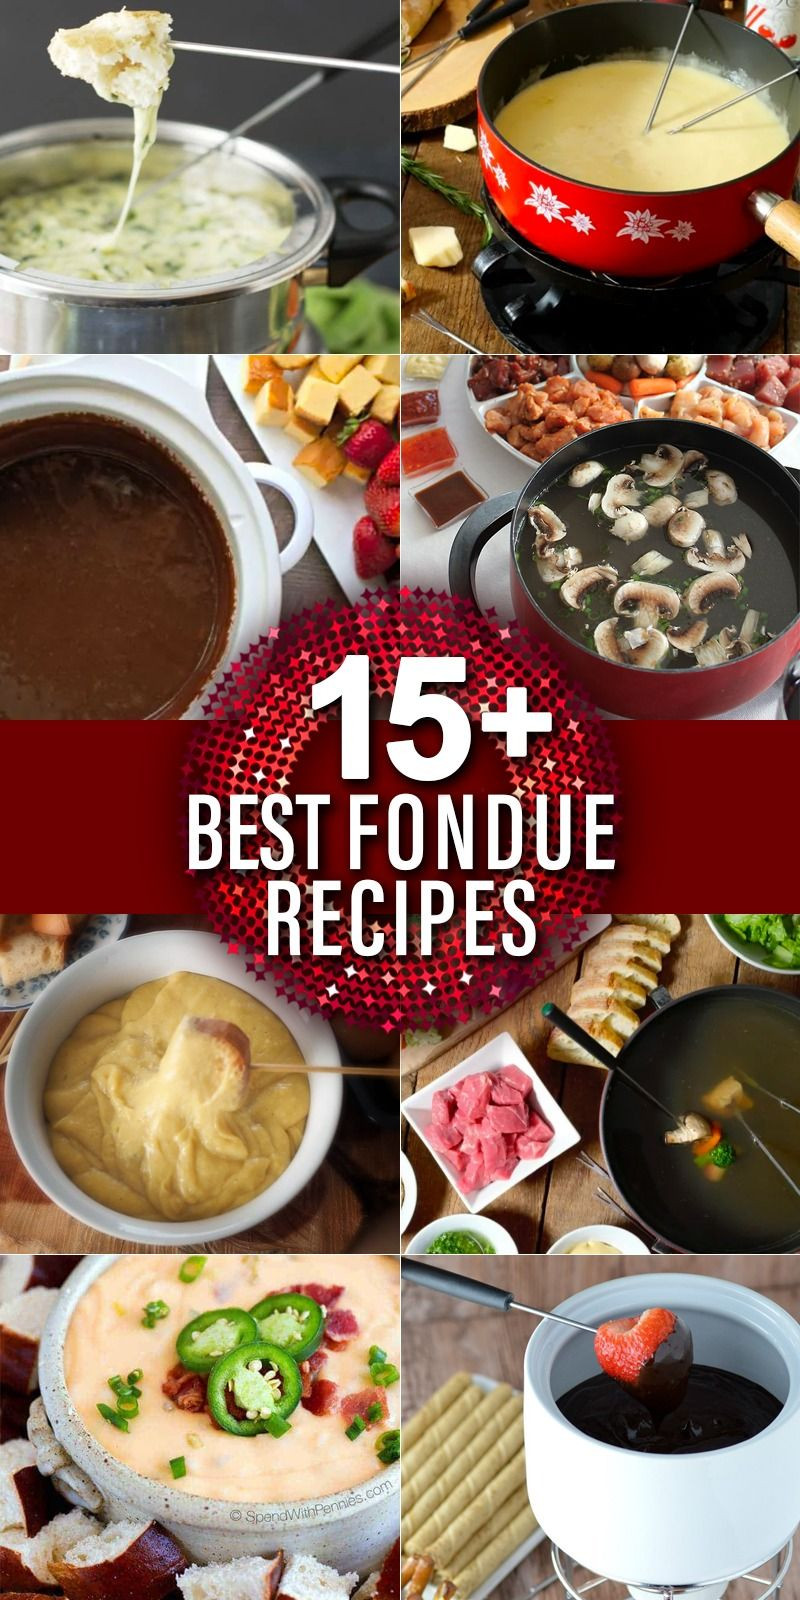 Fondue Recipes For Kids
 15 Best Fondue Recipes in 2020